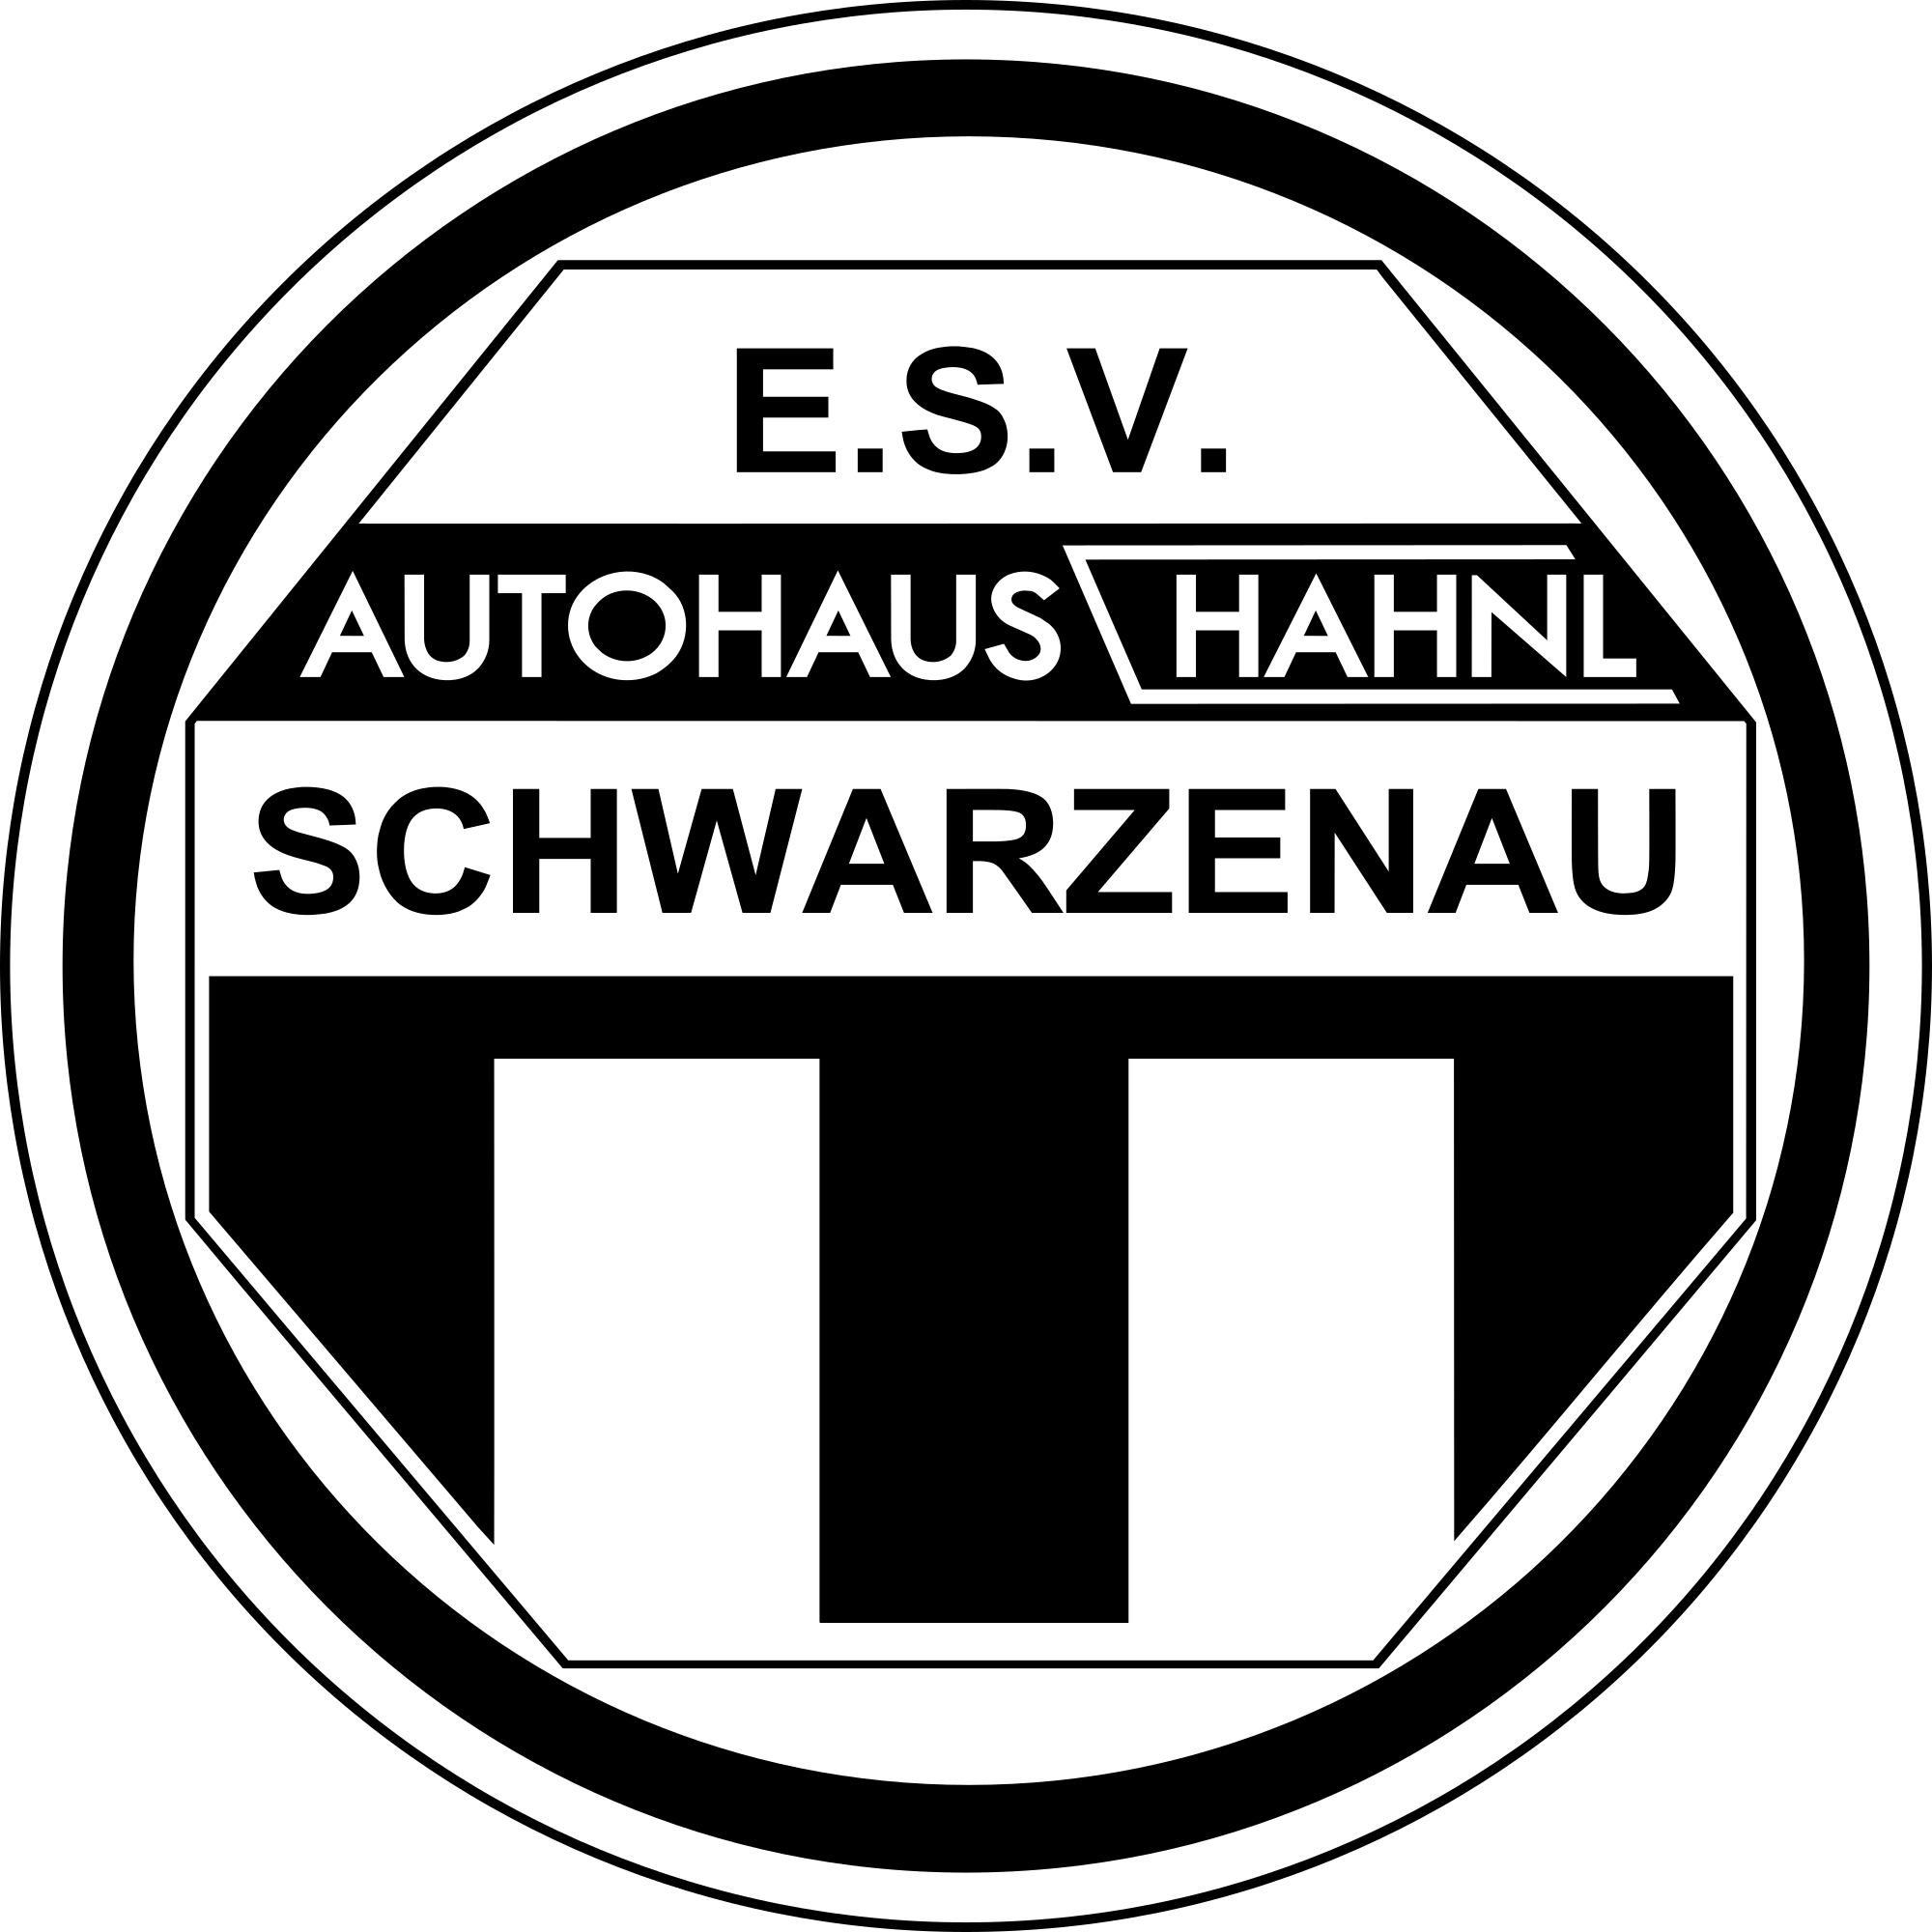 Vereinslogo Schwarzenau